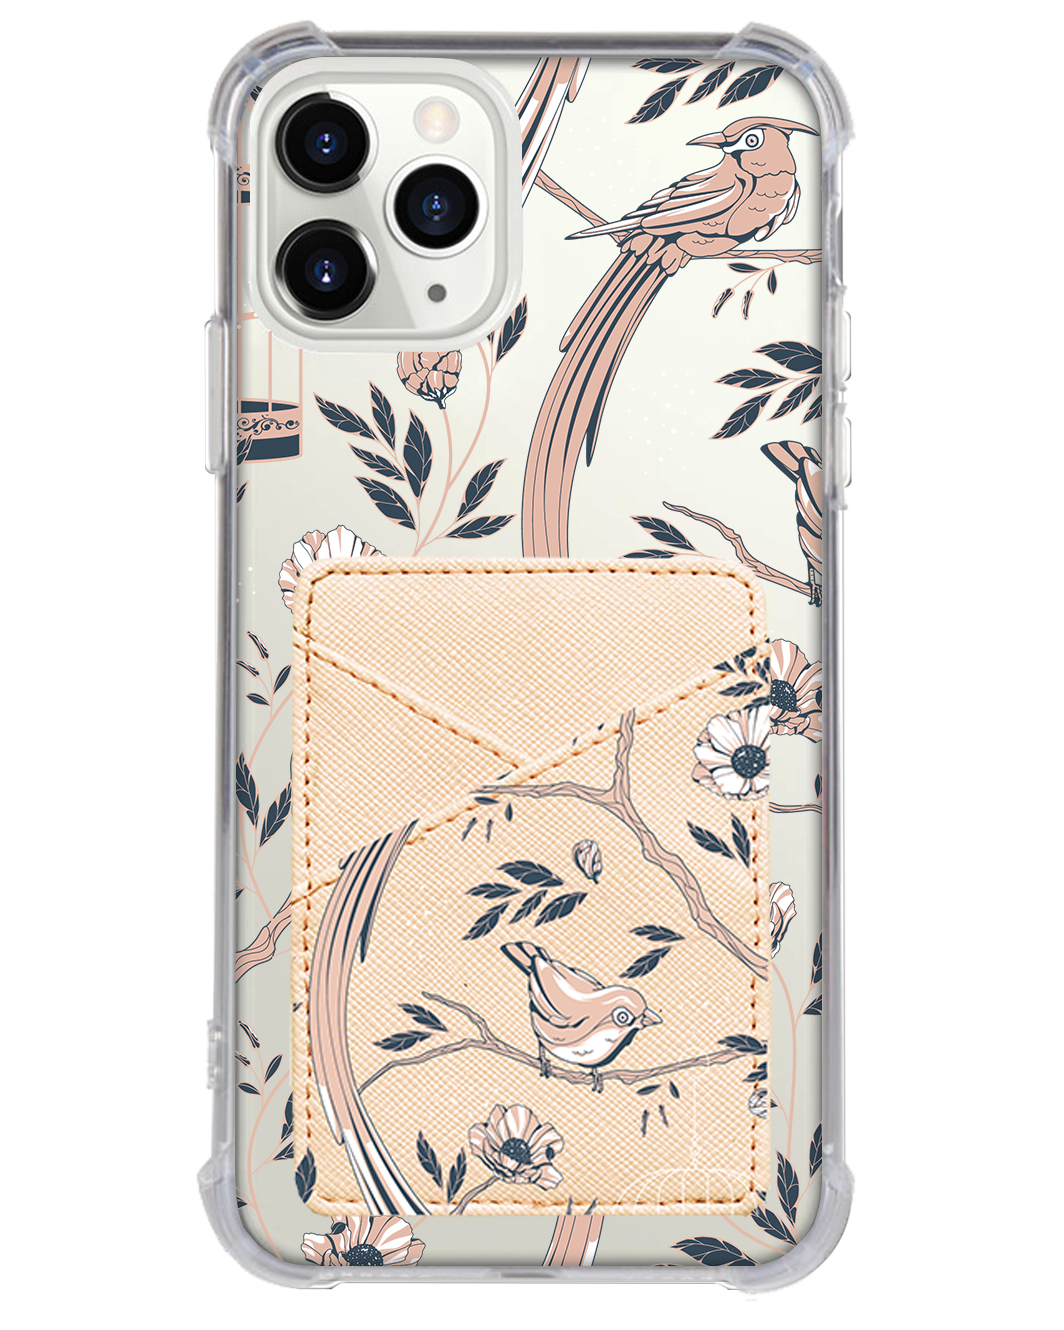 iPhone Phone Wallet Case - Lovebird 2.0